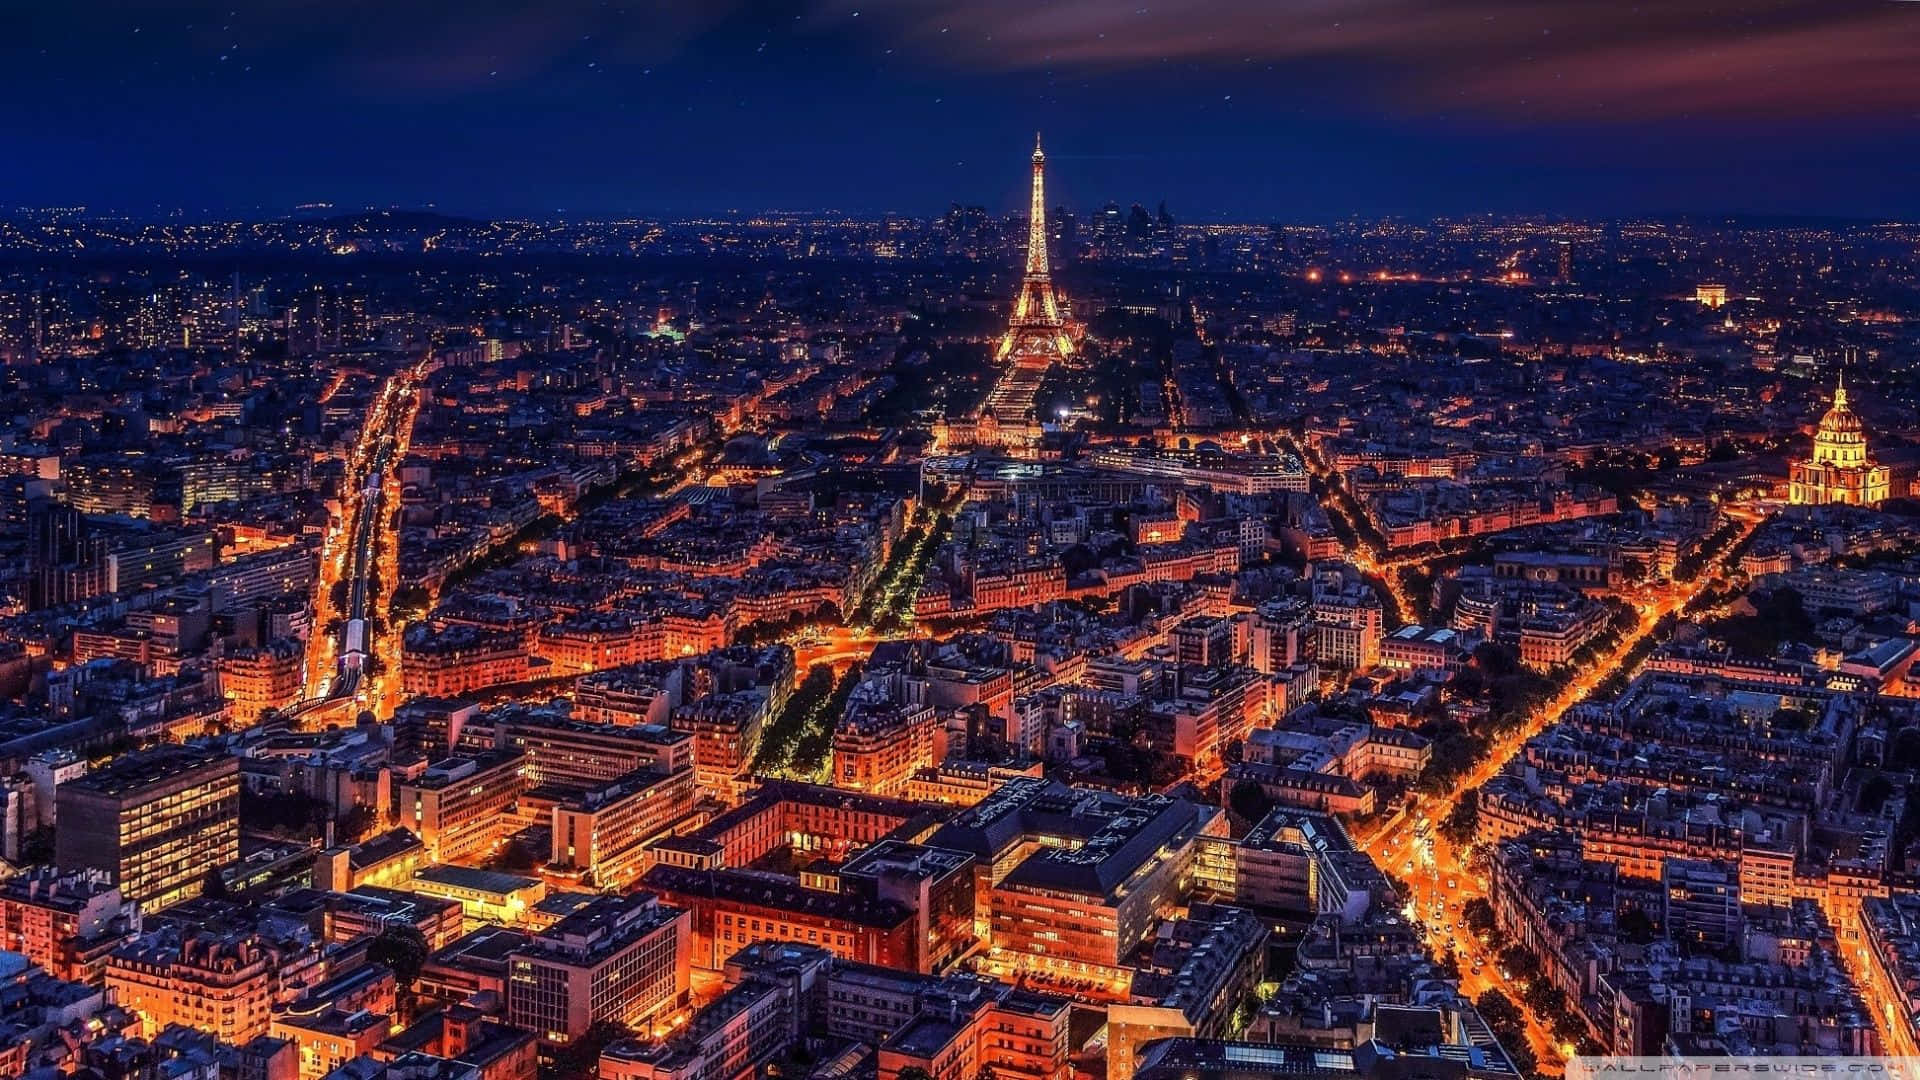 Majestic Eiffel Tower Illuminated At Night In Paris Background